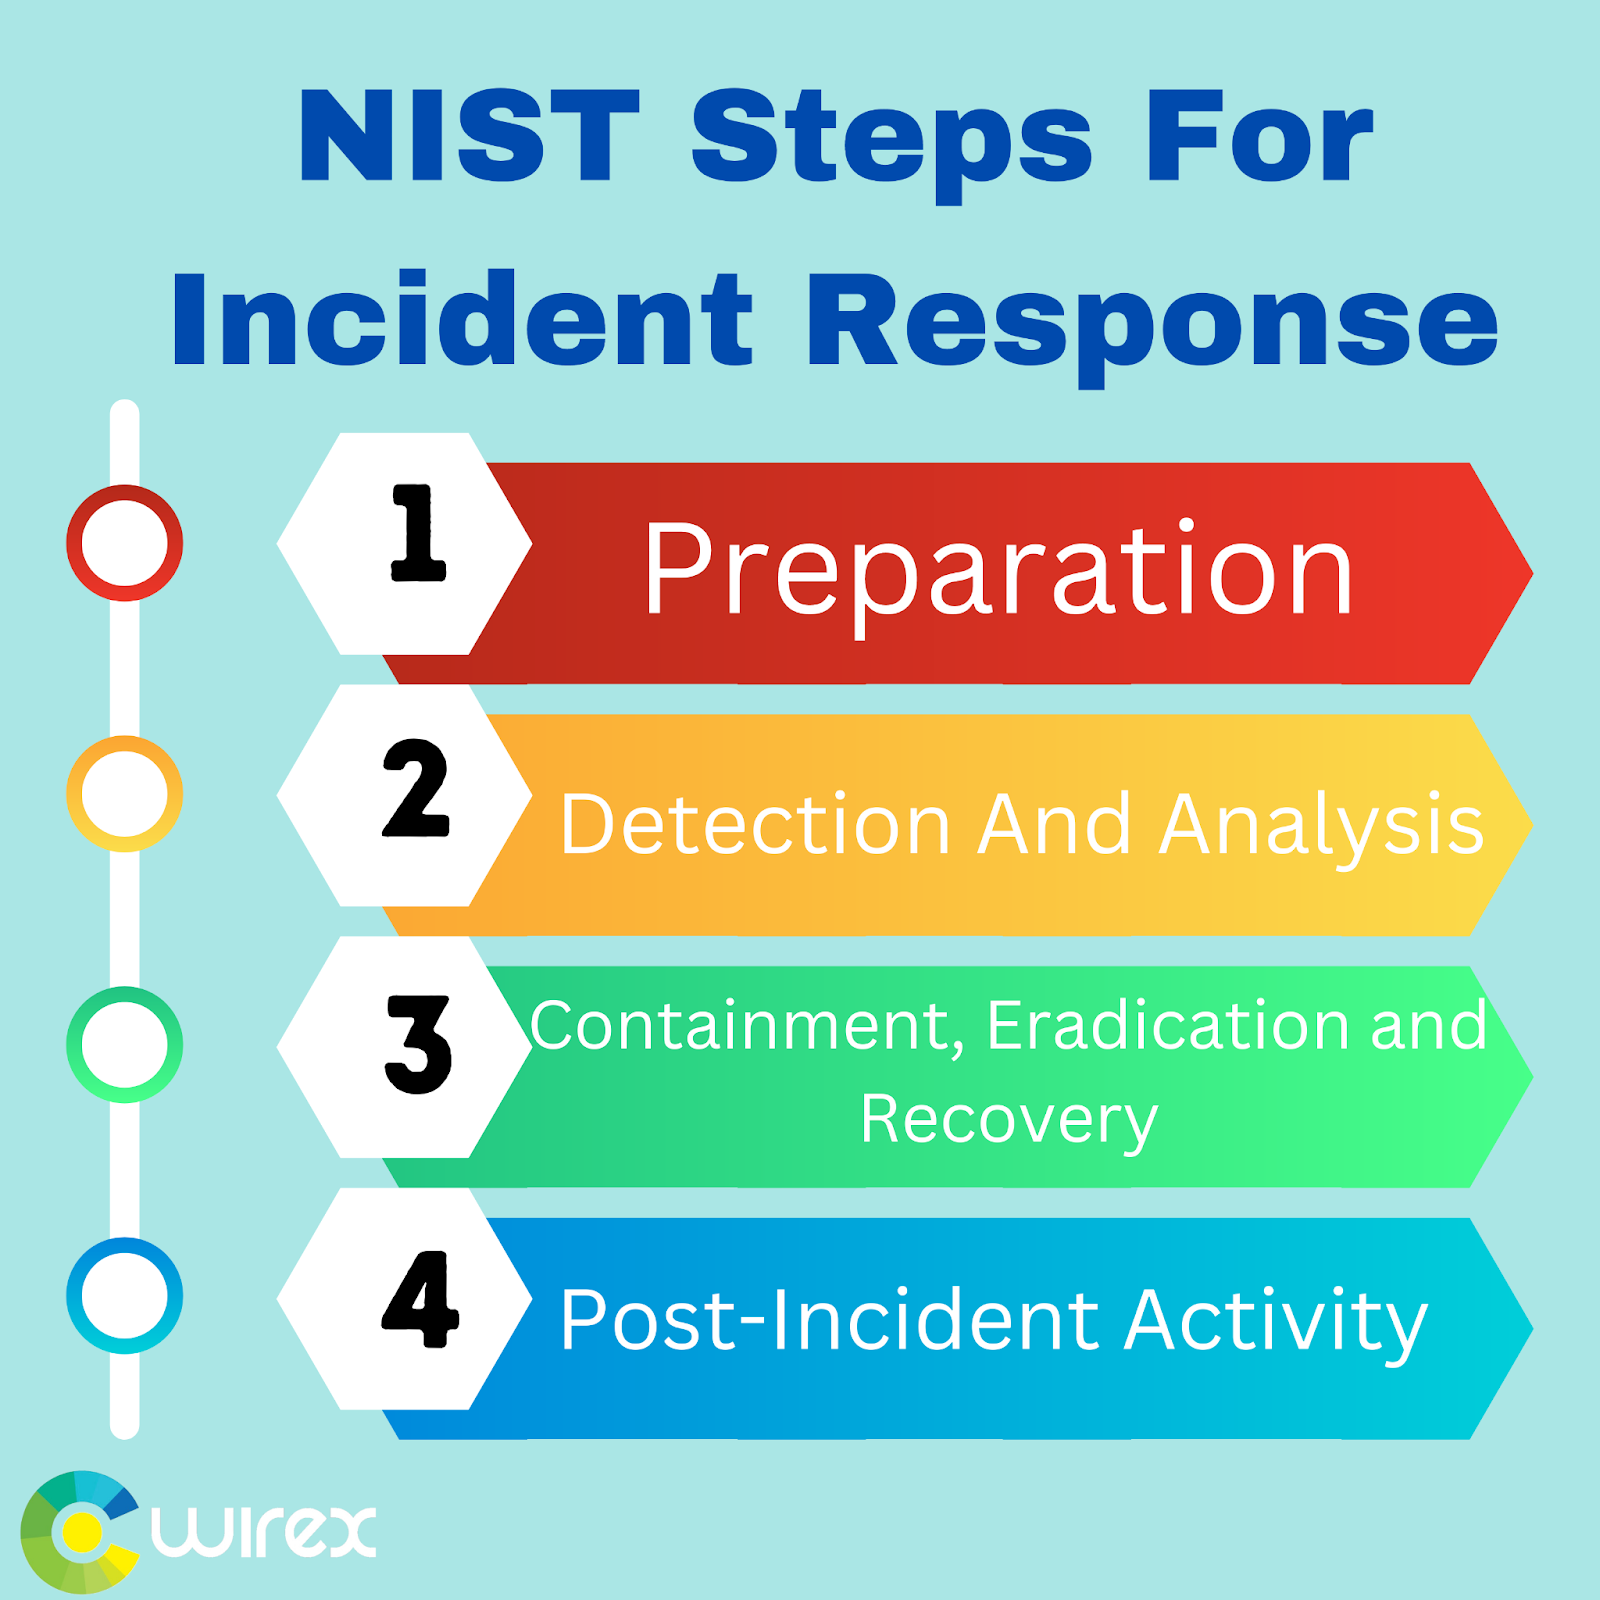 NIST steps for incident response